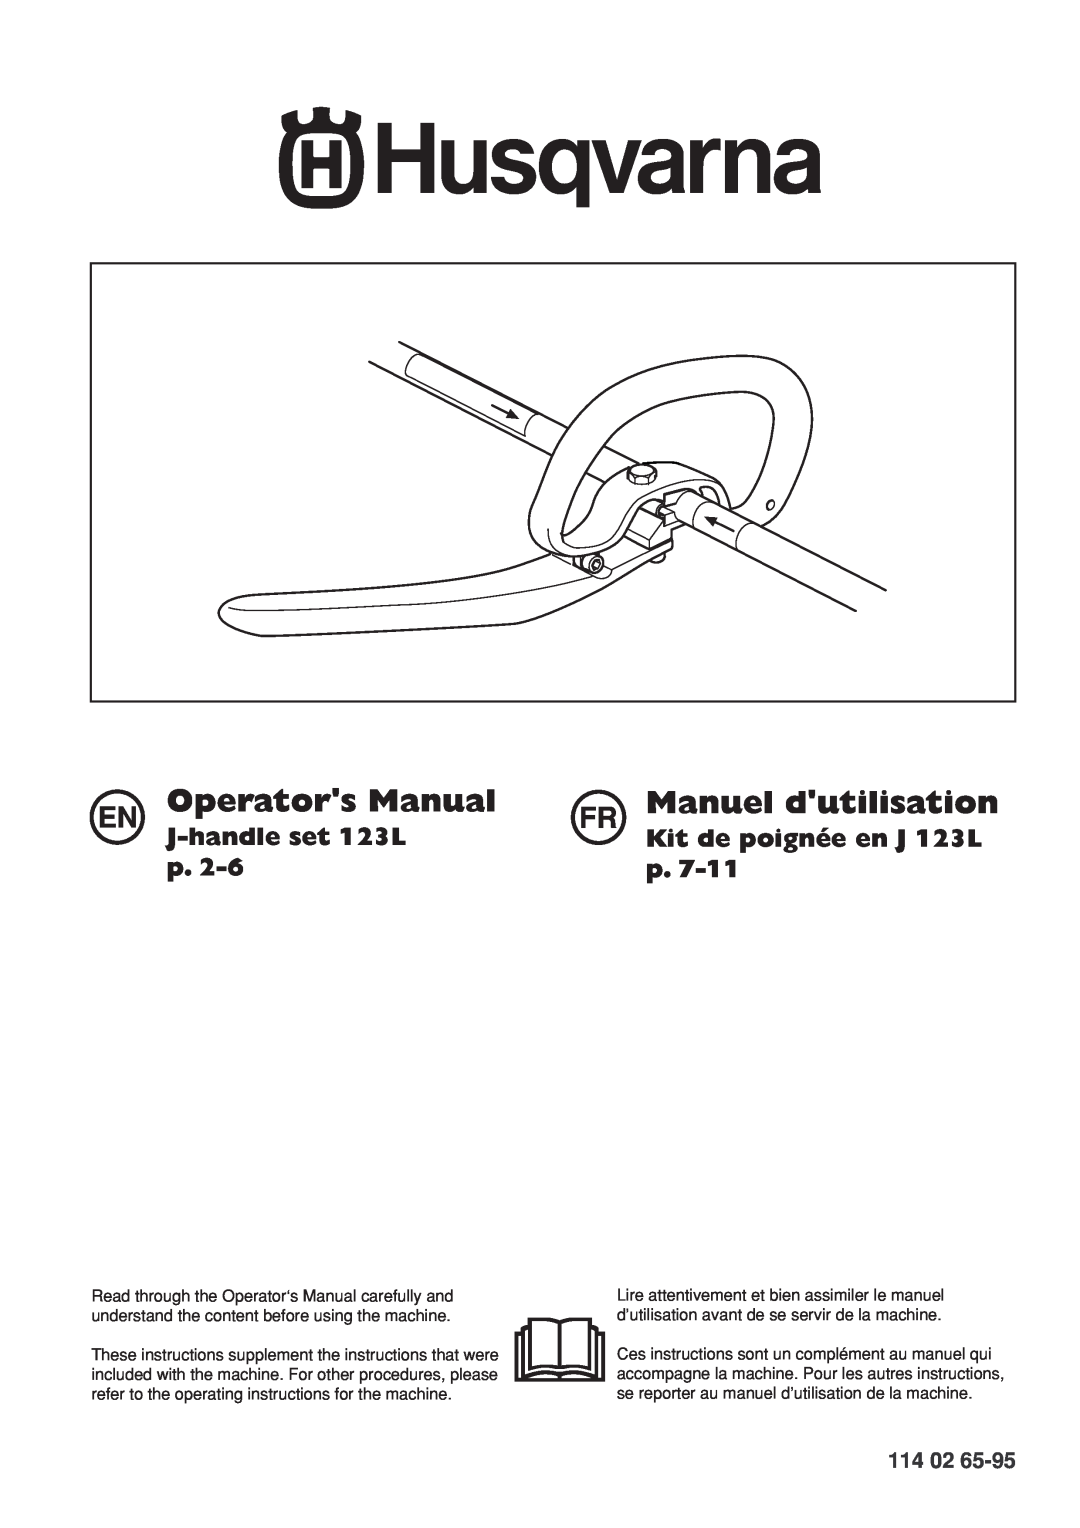 Husqvarna J123L manuel dutilisation Operators Manual, FR Manuel dutilisation, J-handleset 123L, Kit de poignée en J 123L 